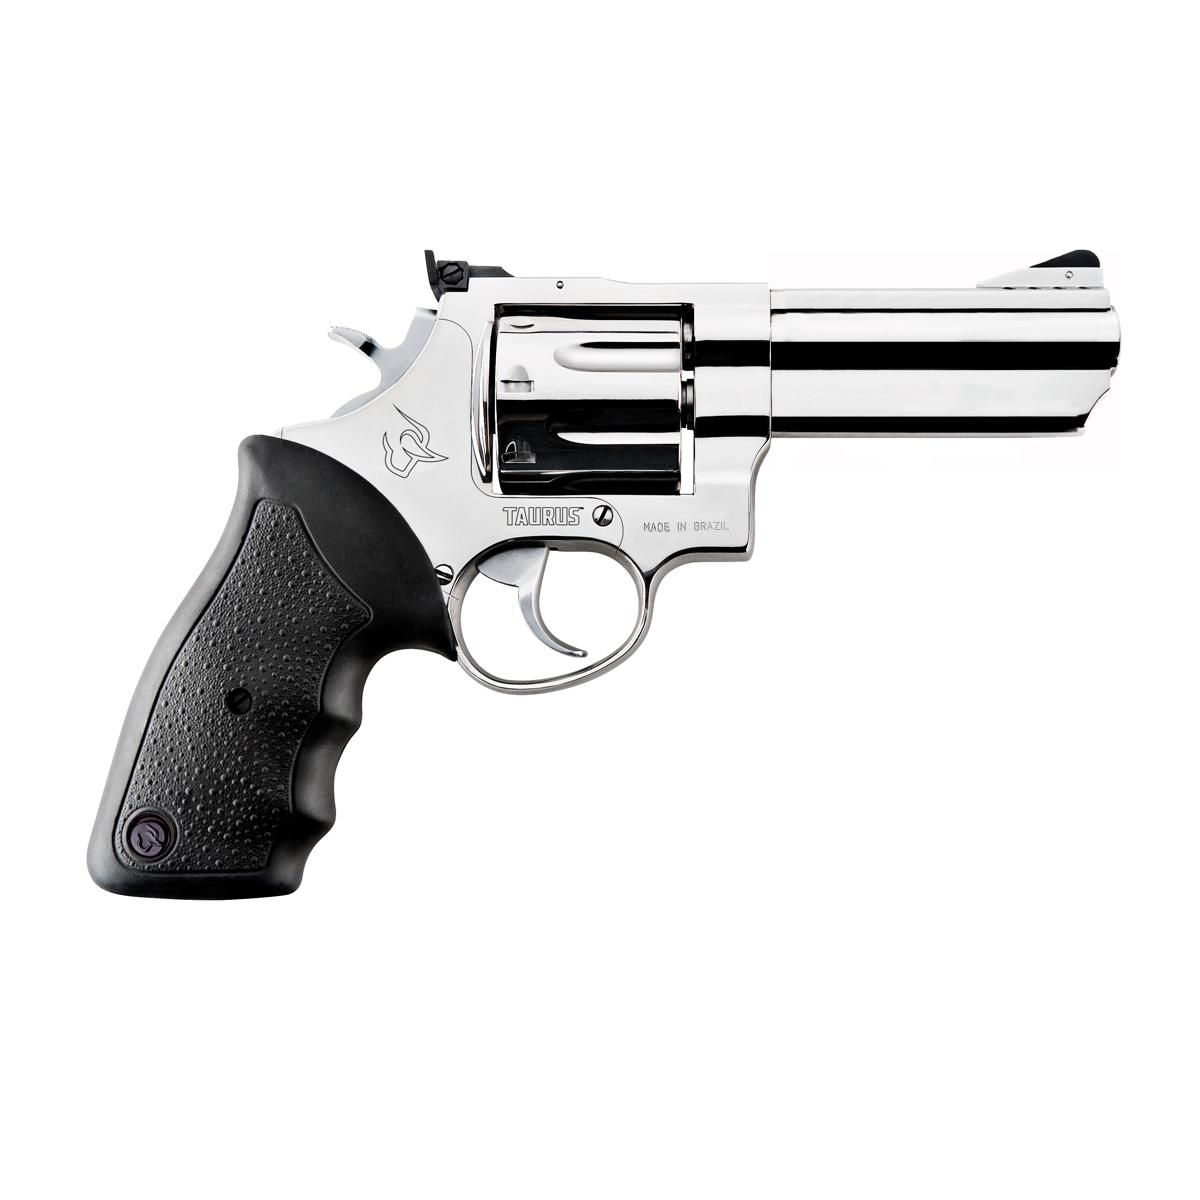 https://www.armastore.com.br/img/products/revolver-taurus-rt-838-calibre-38-spl-4_1_1200.jpg